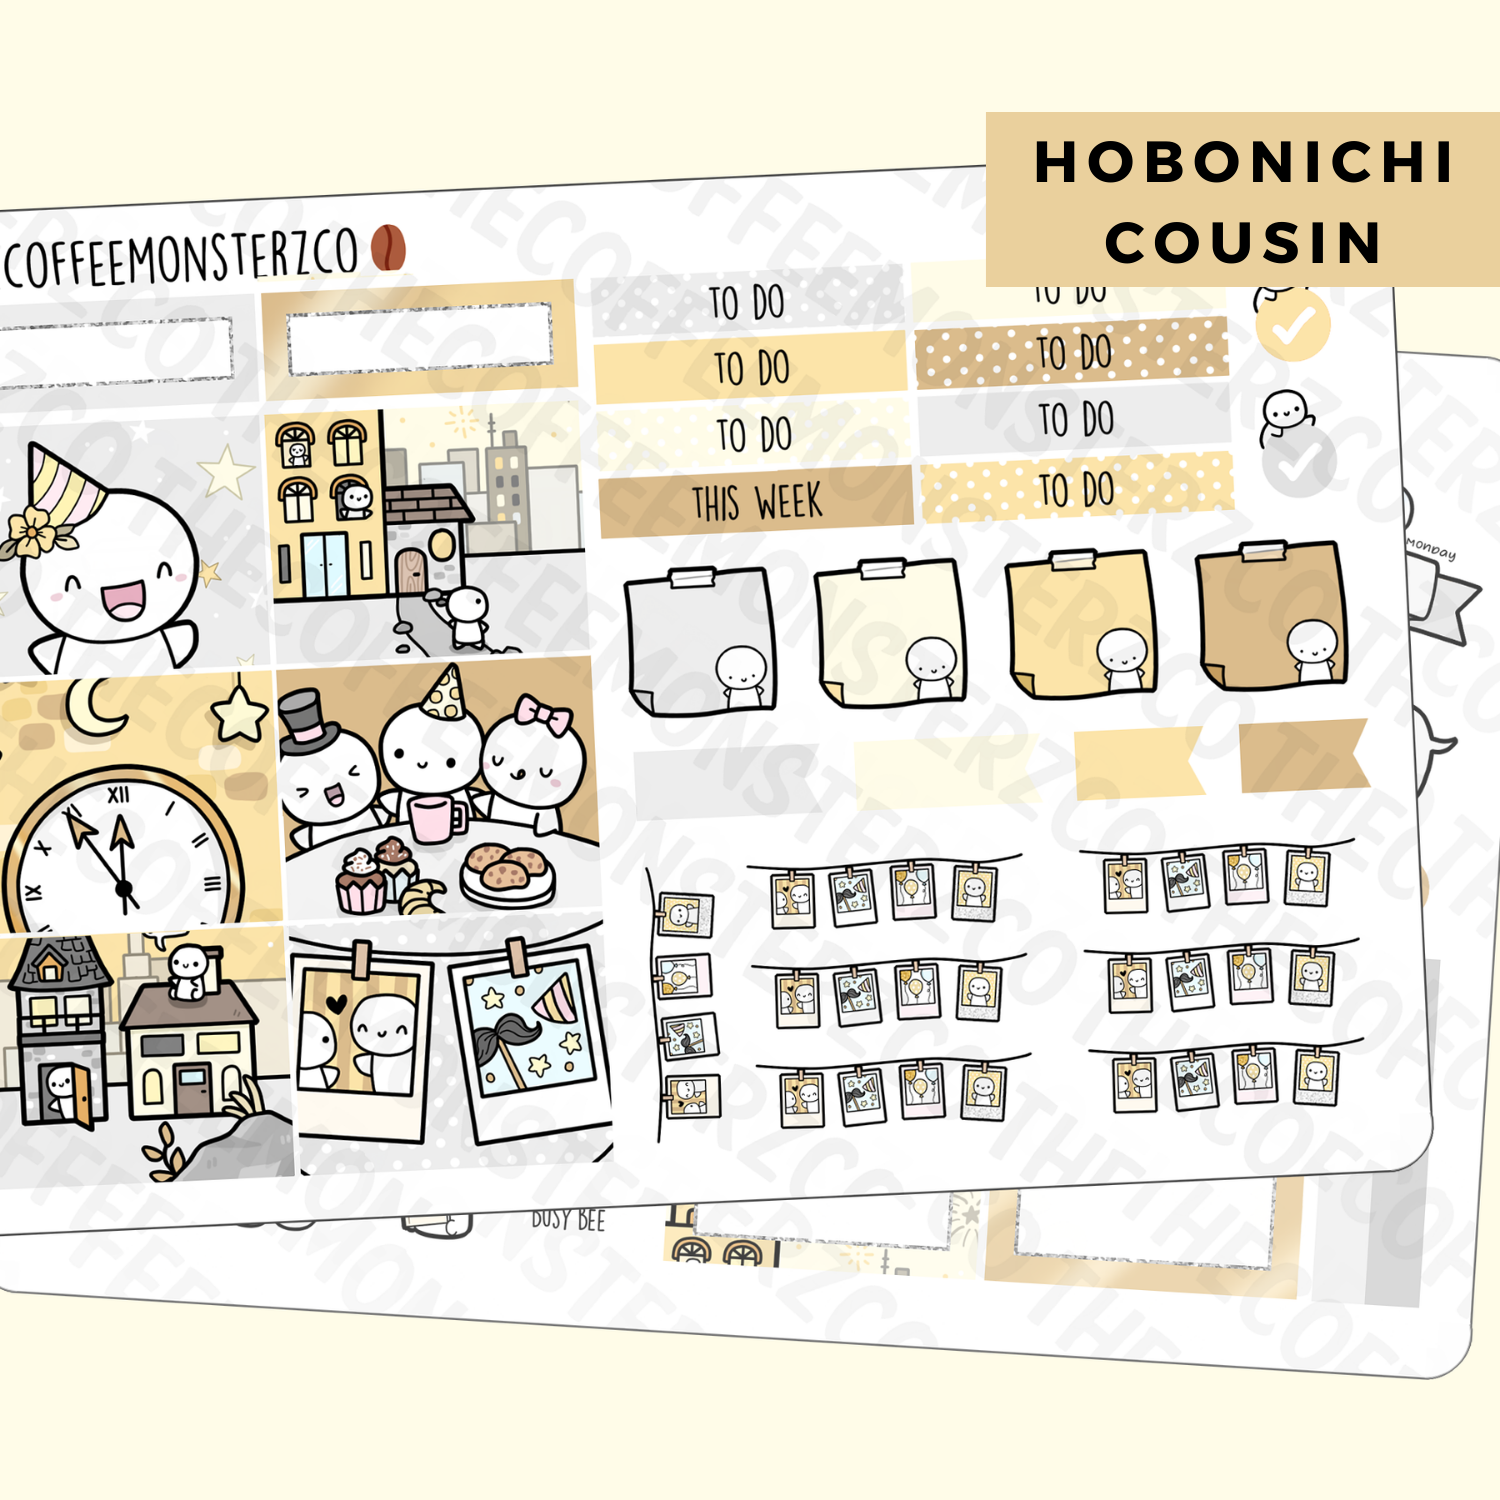 Golden New Year Hobonichi Cousin Kit